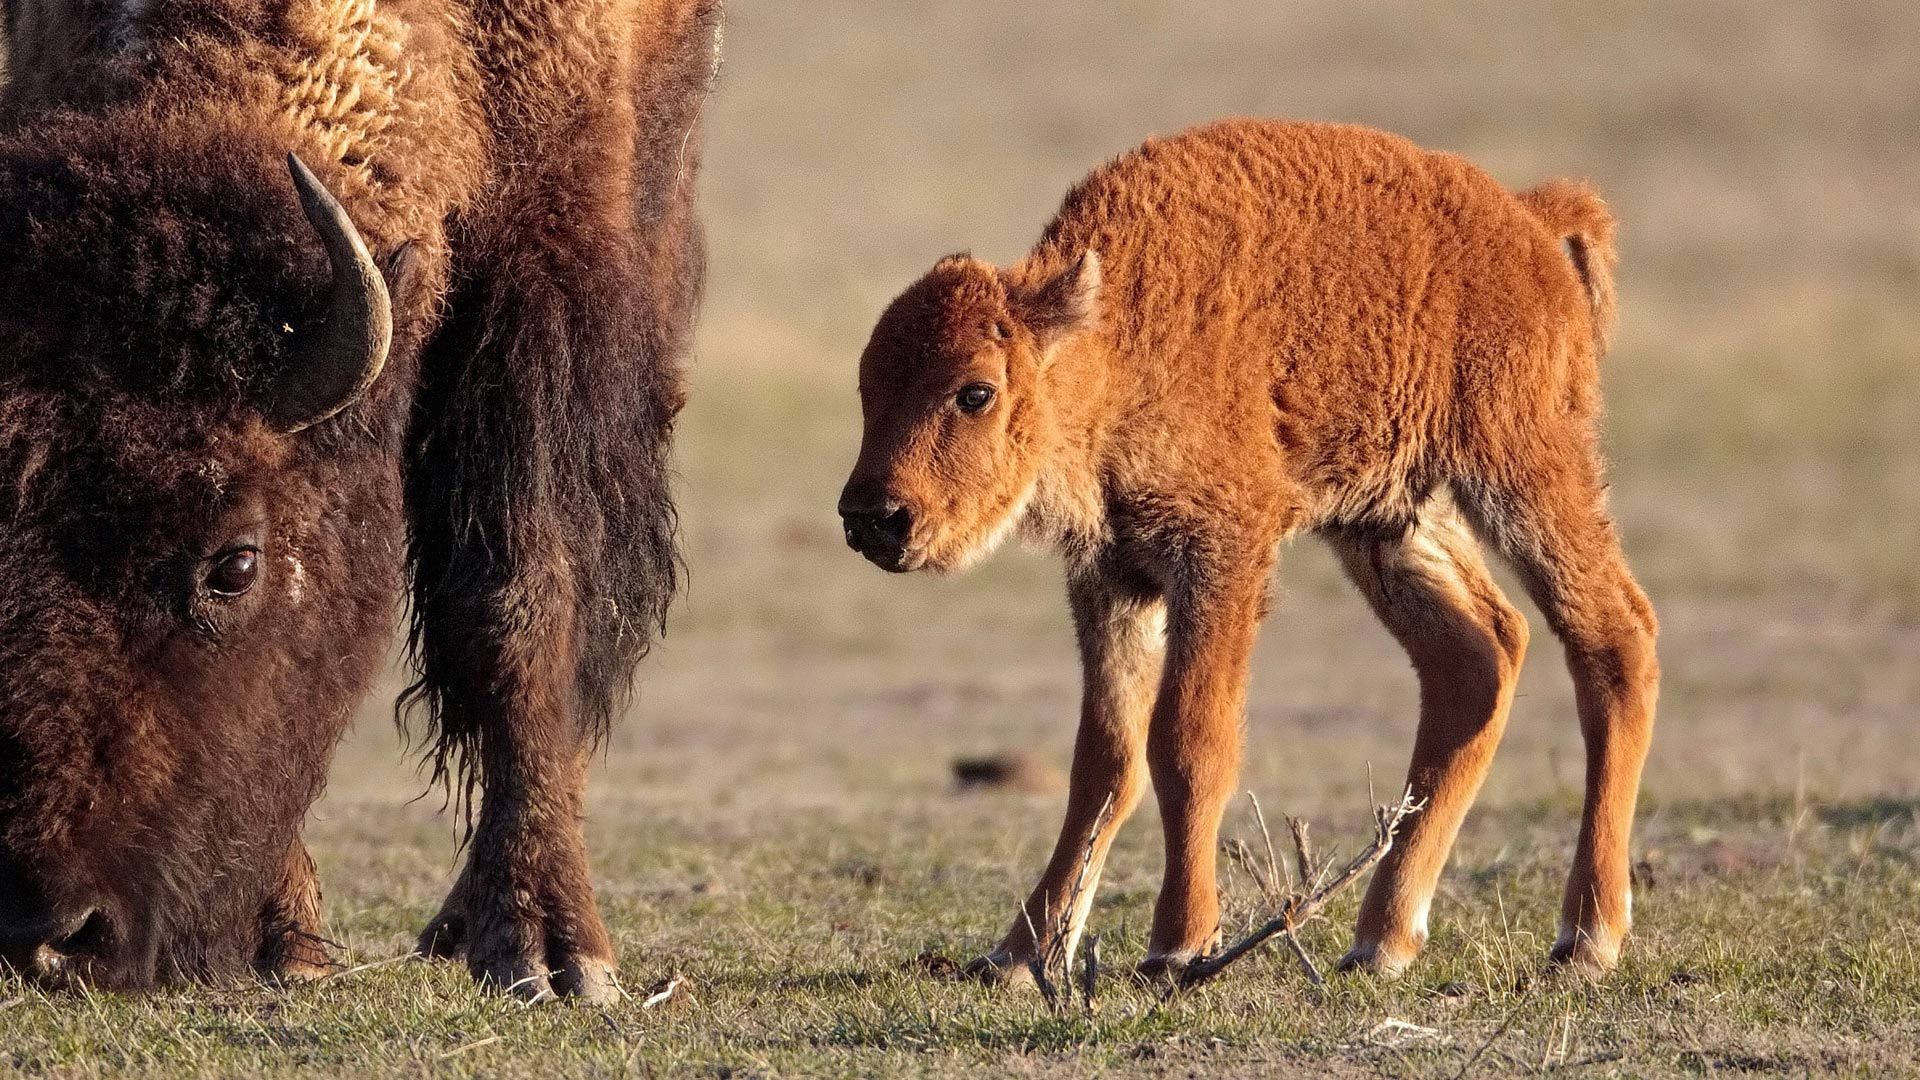 animals, grass, young, calf, buffalo, joey, horn, bison